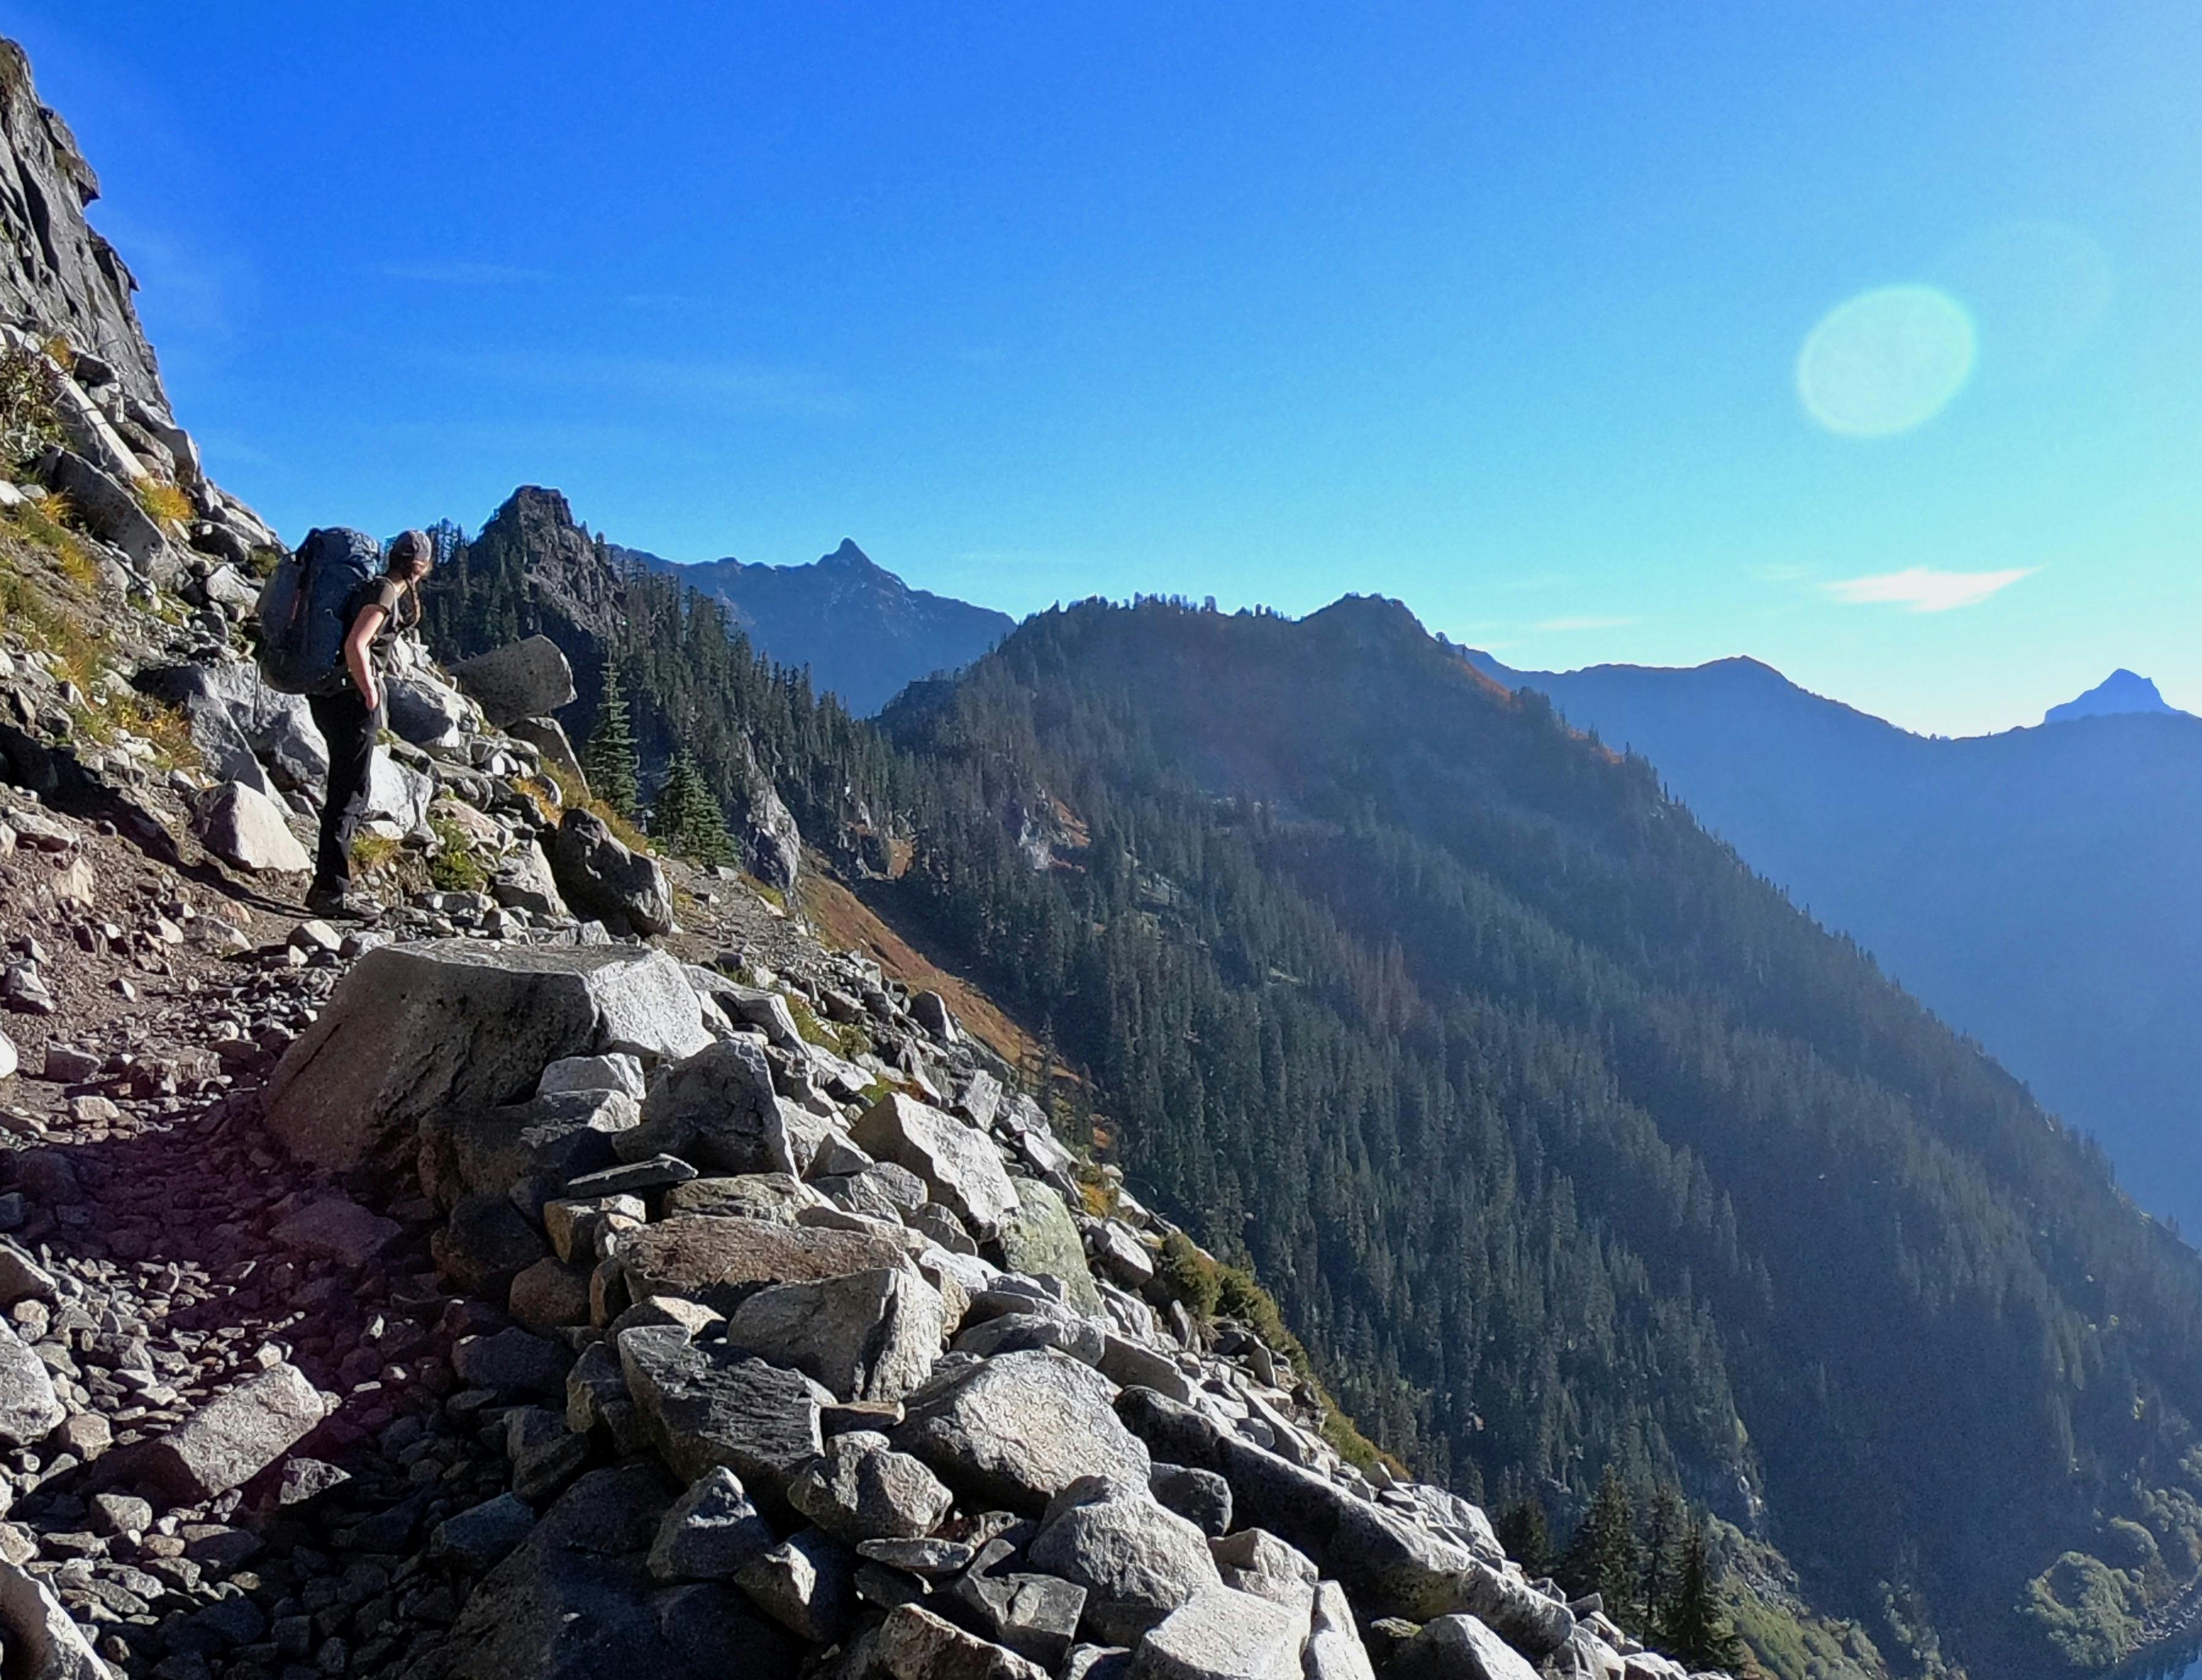 A woman looks ahead on a rocky hiking trail